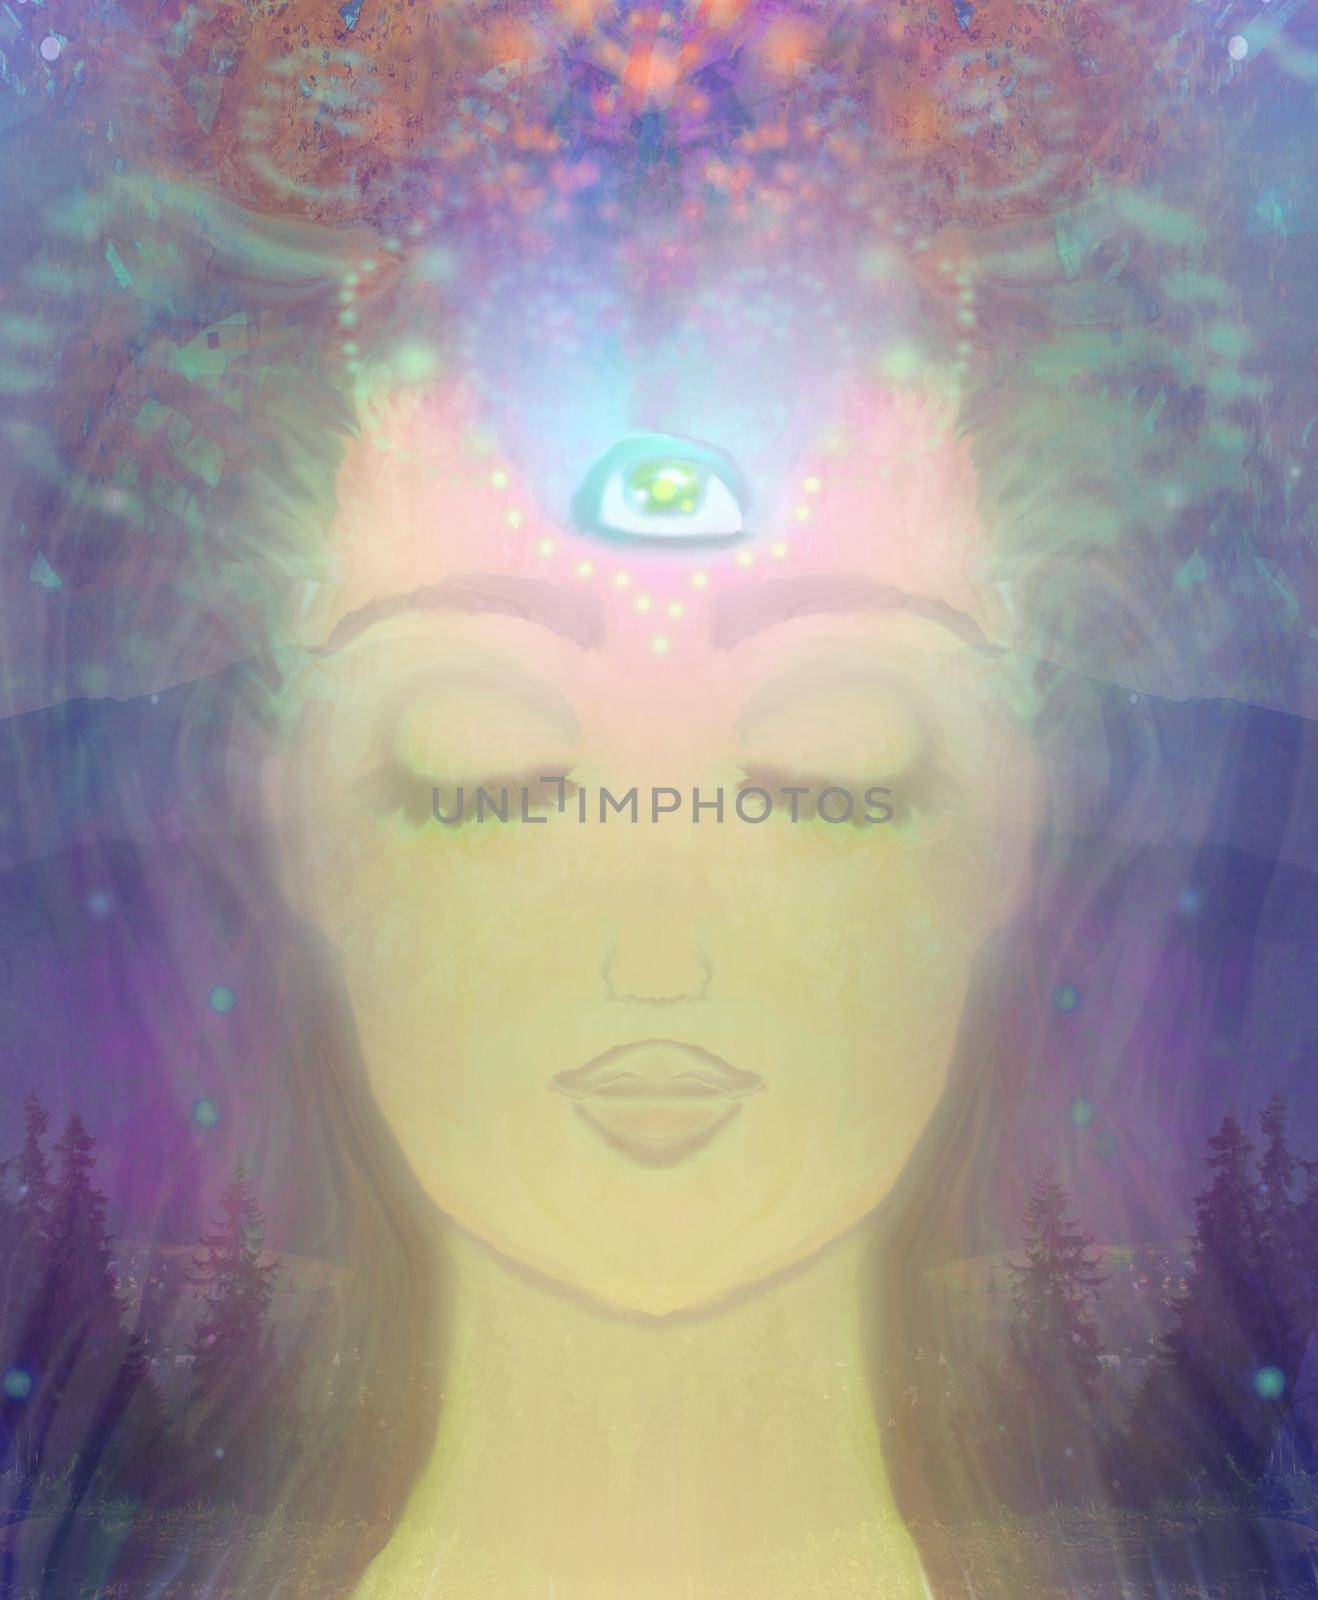 Woman with third eye, psychic supernatural senses